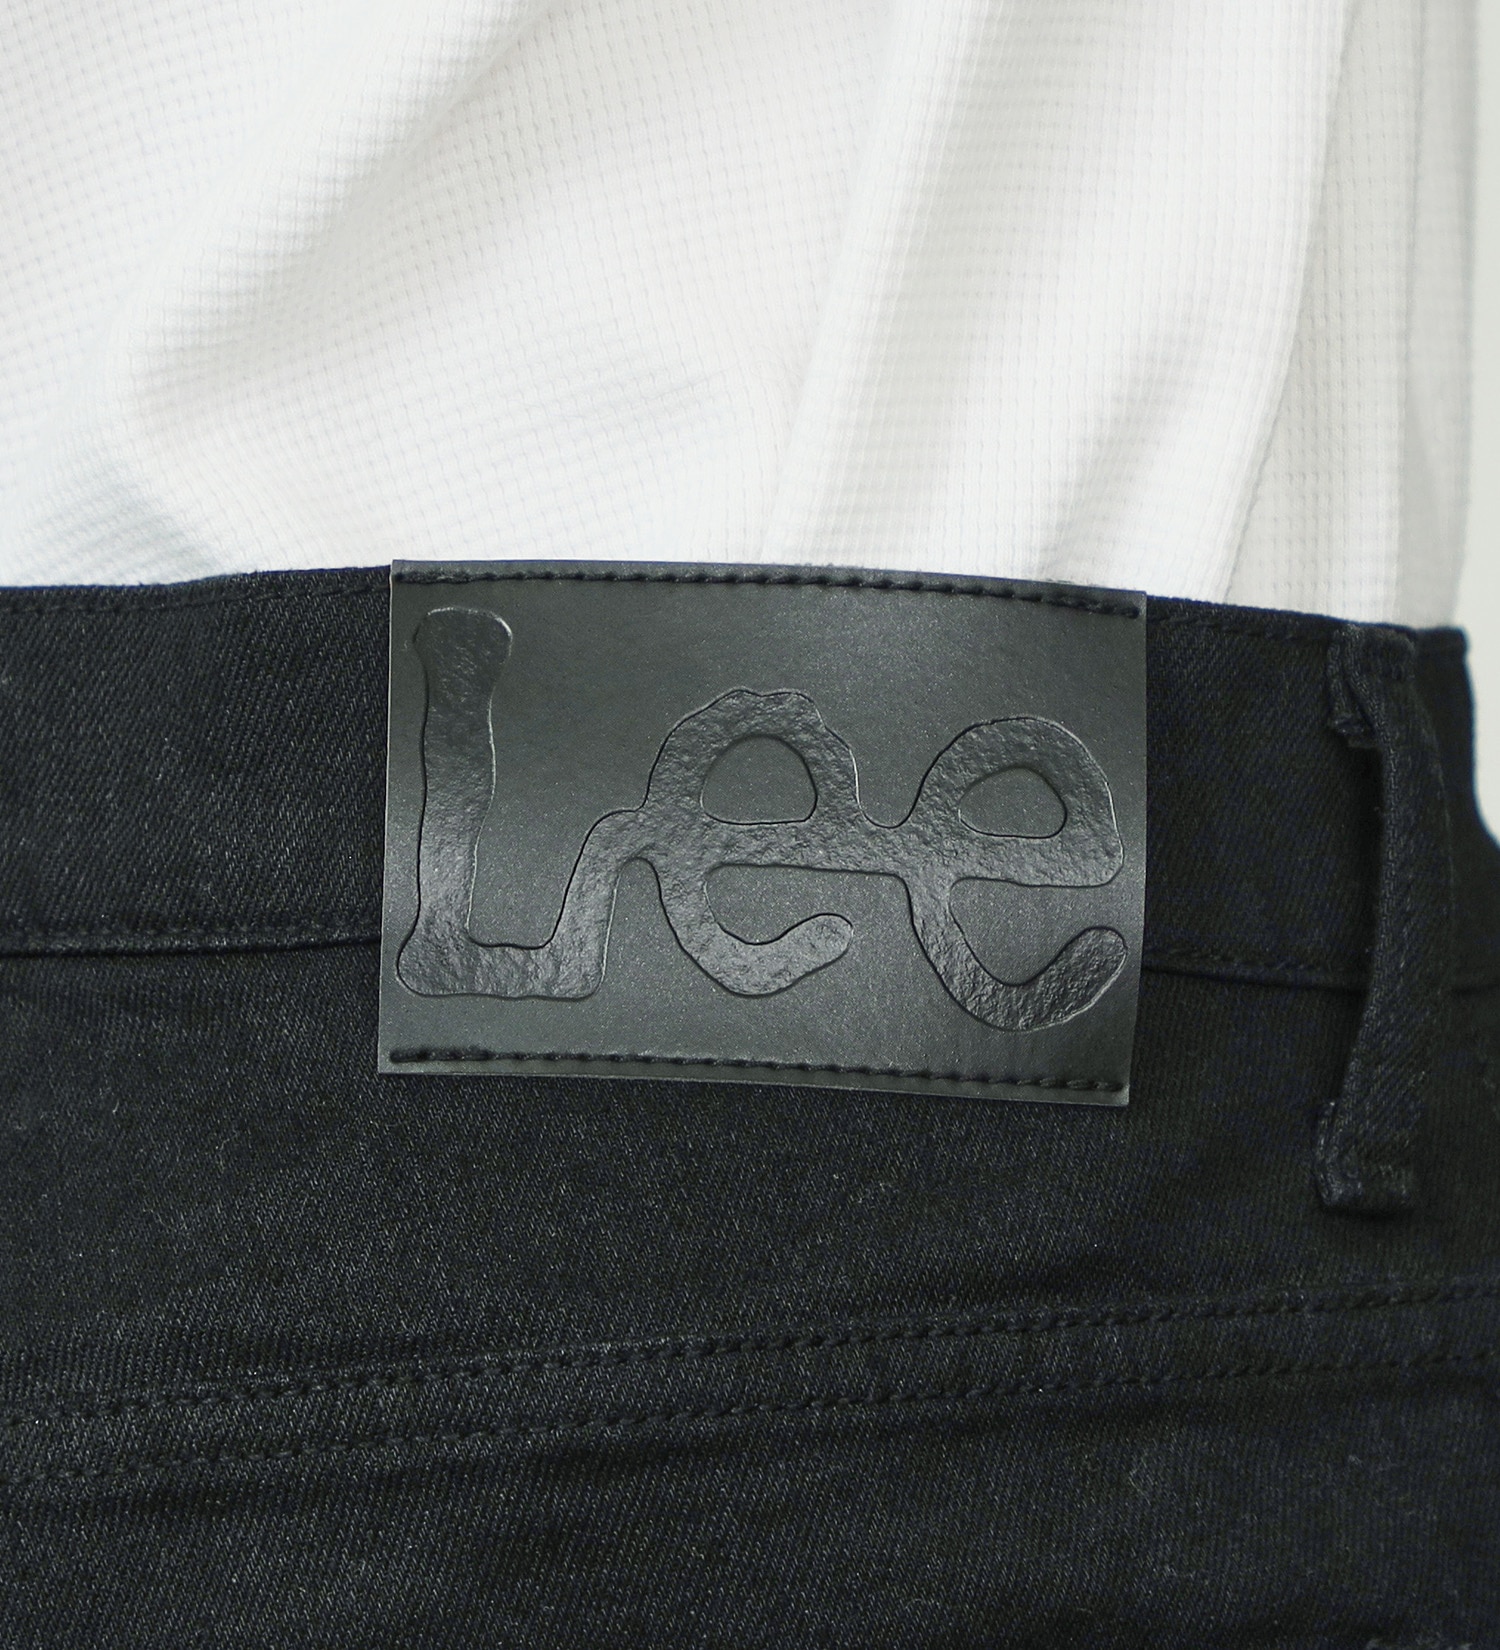 Lee(リー)のX-LINE ZIP NARROW|パンツ/パンツ/メンズ|ブラック